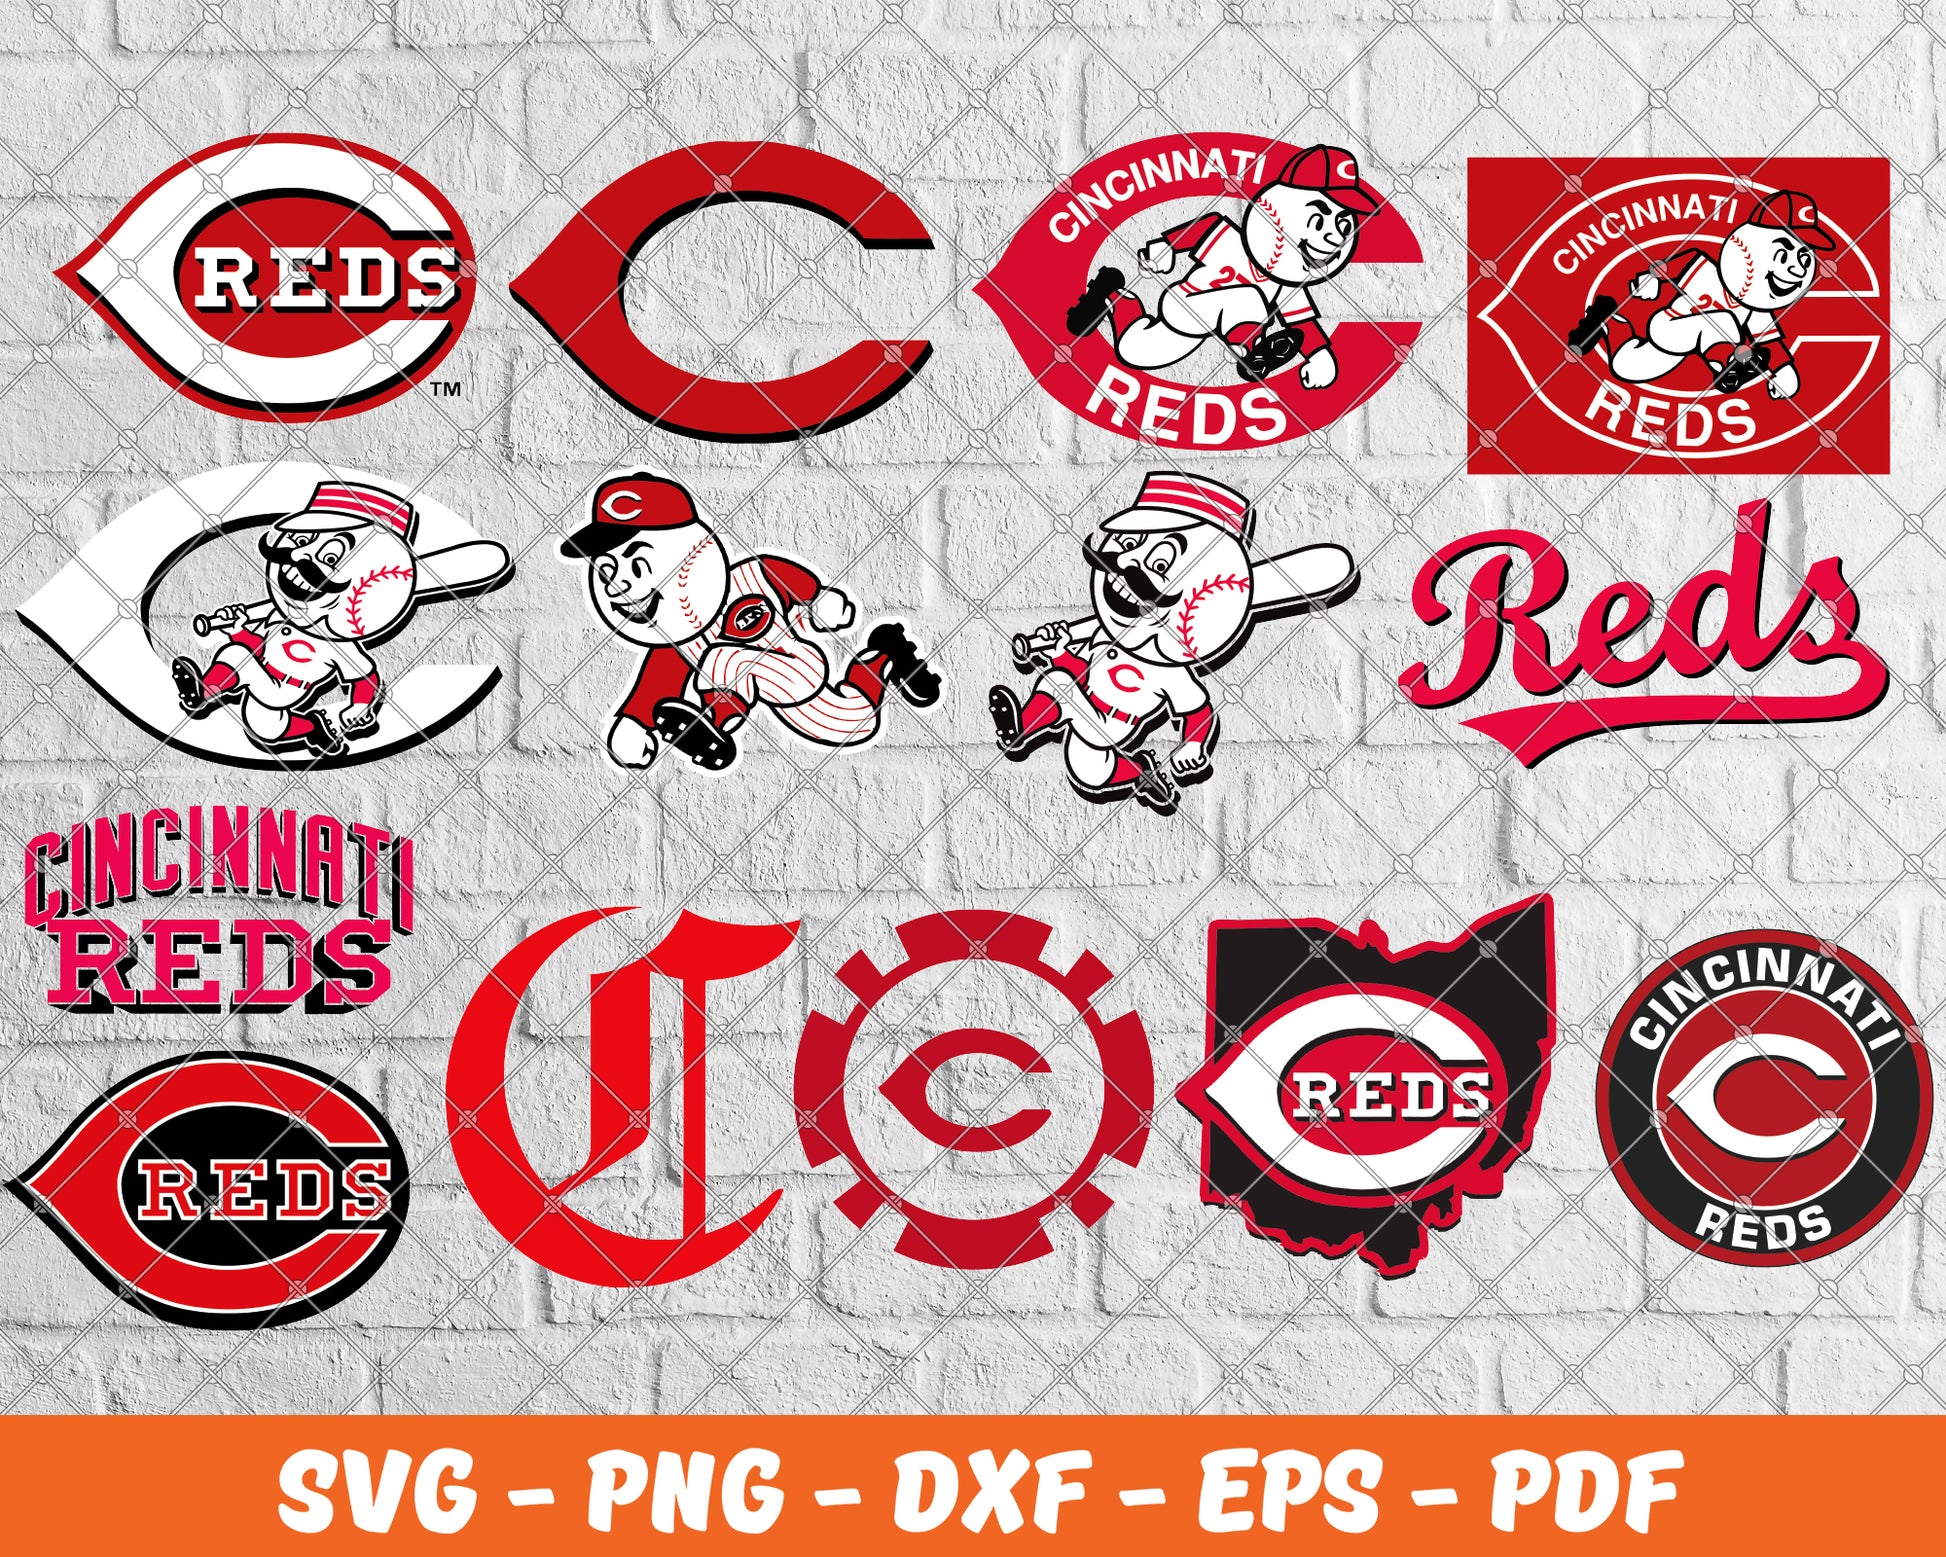 Cincinnati Reds Logothroughout their history.